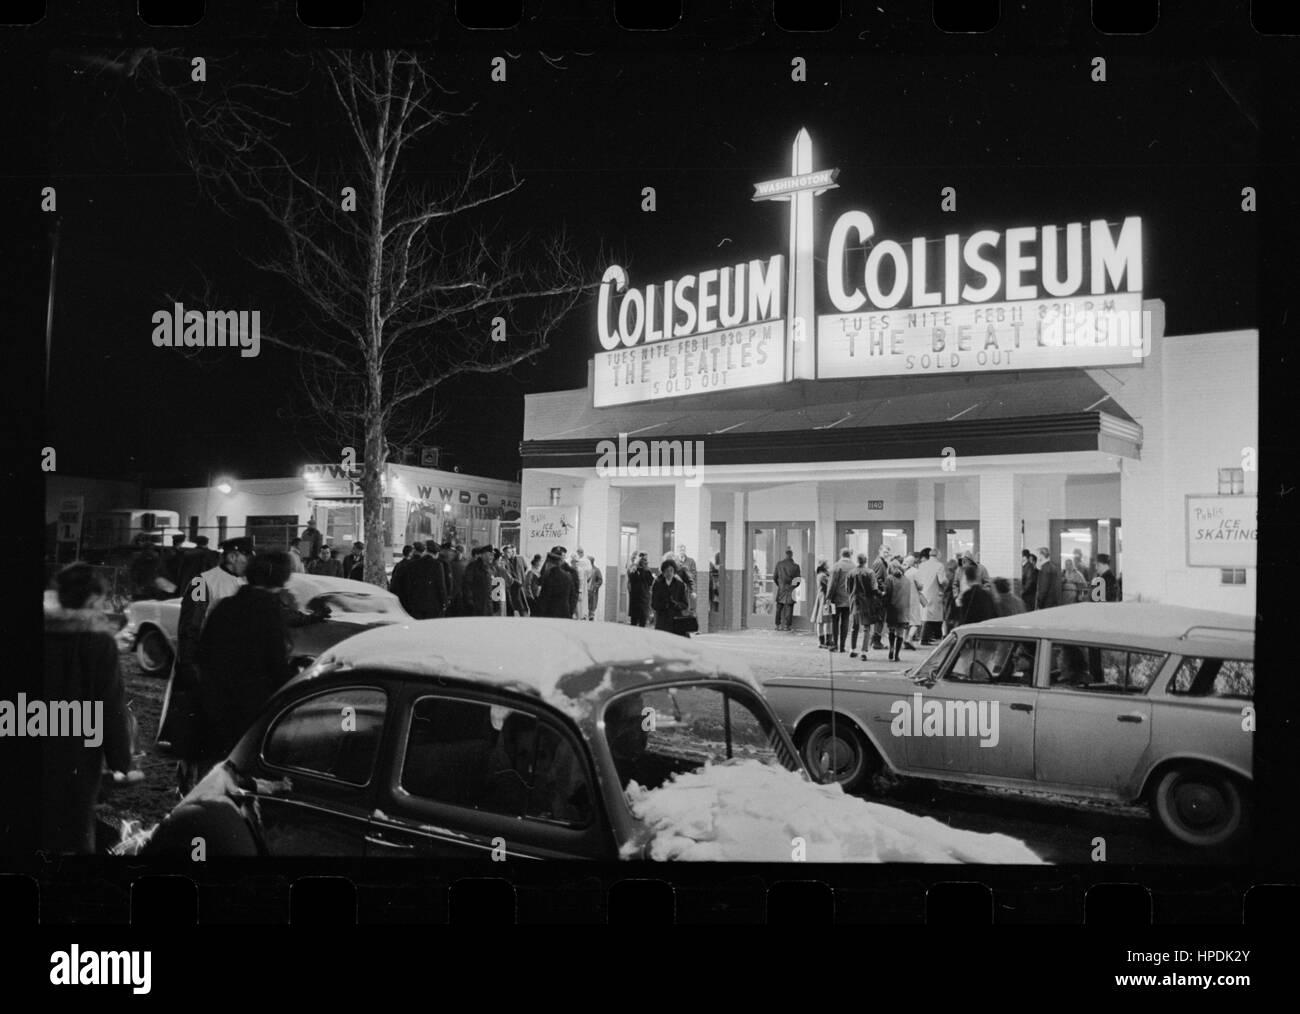 The crowd outside the Washington Coliseum before the Beatles show, Washington, DC, 02/11/1964. Photo by Marion S. Trikosko. Stock Photo